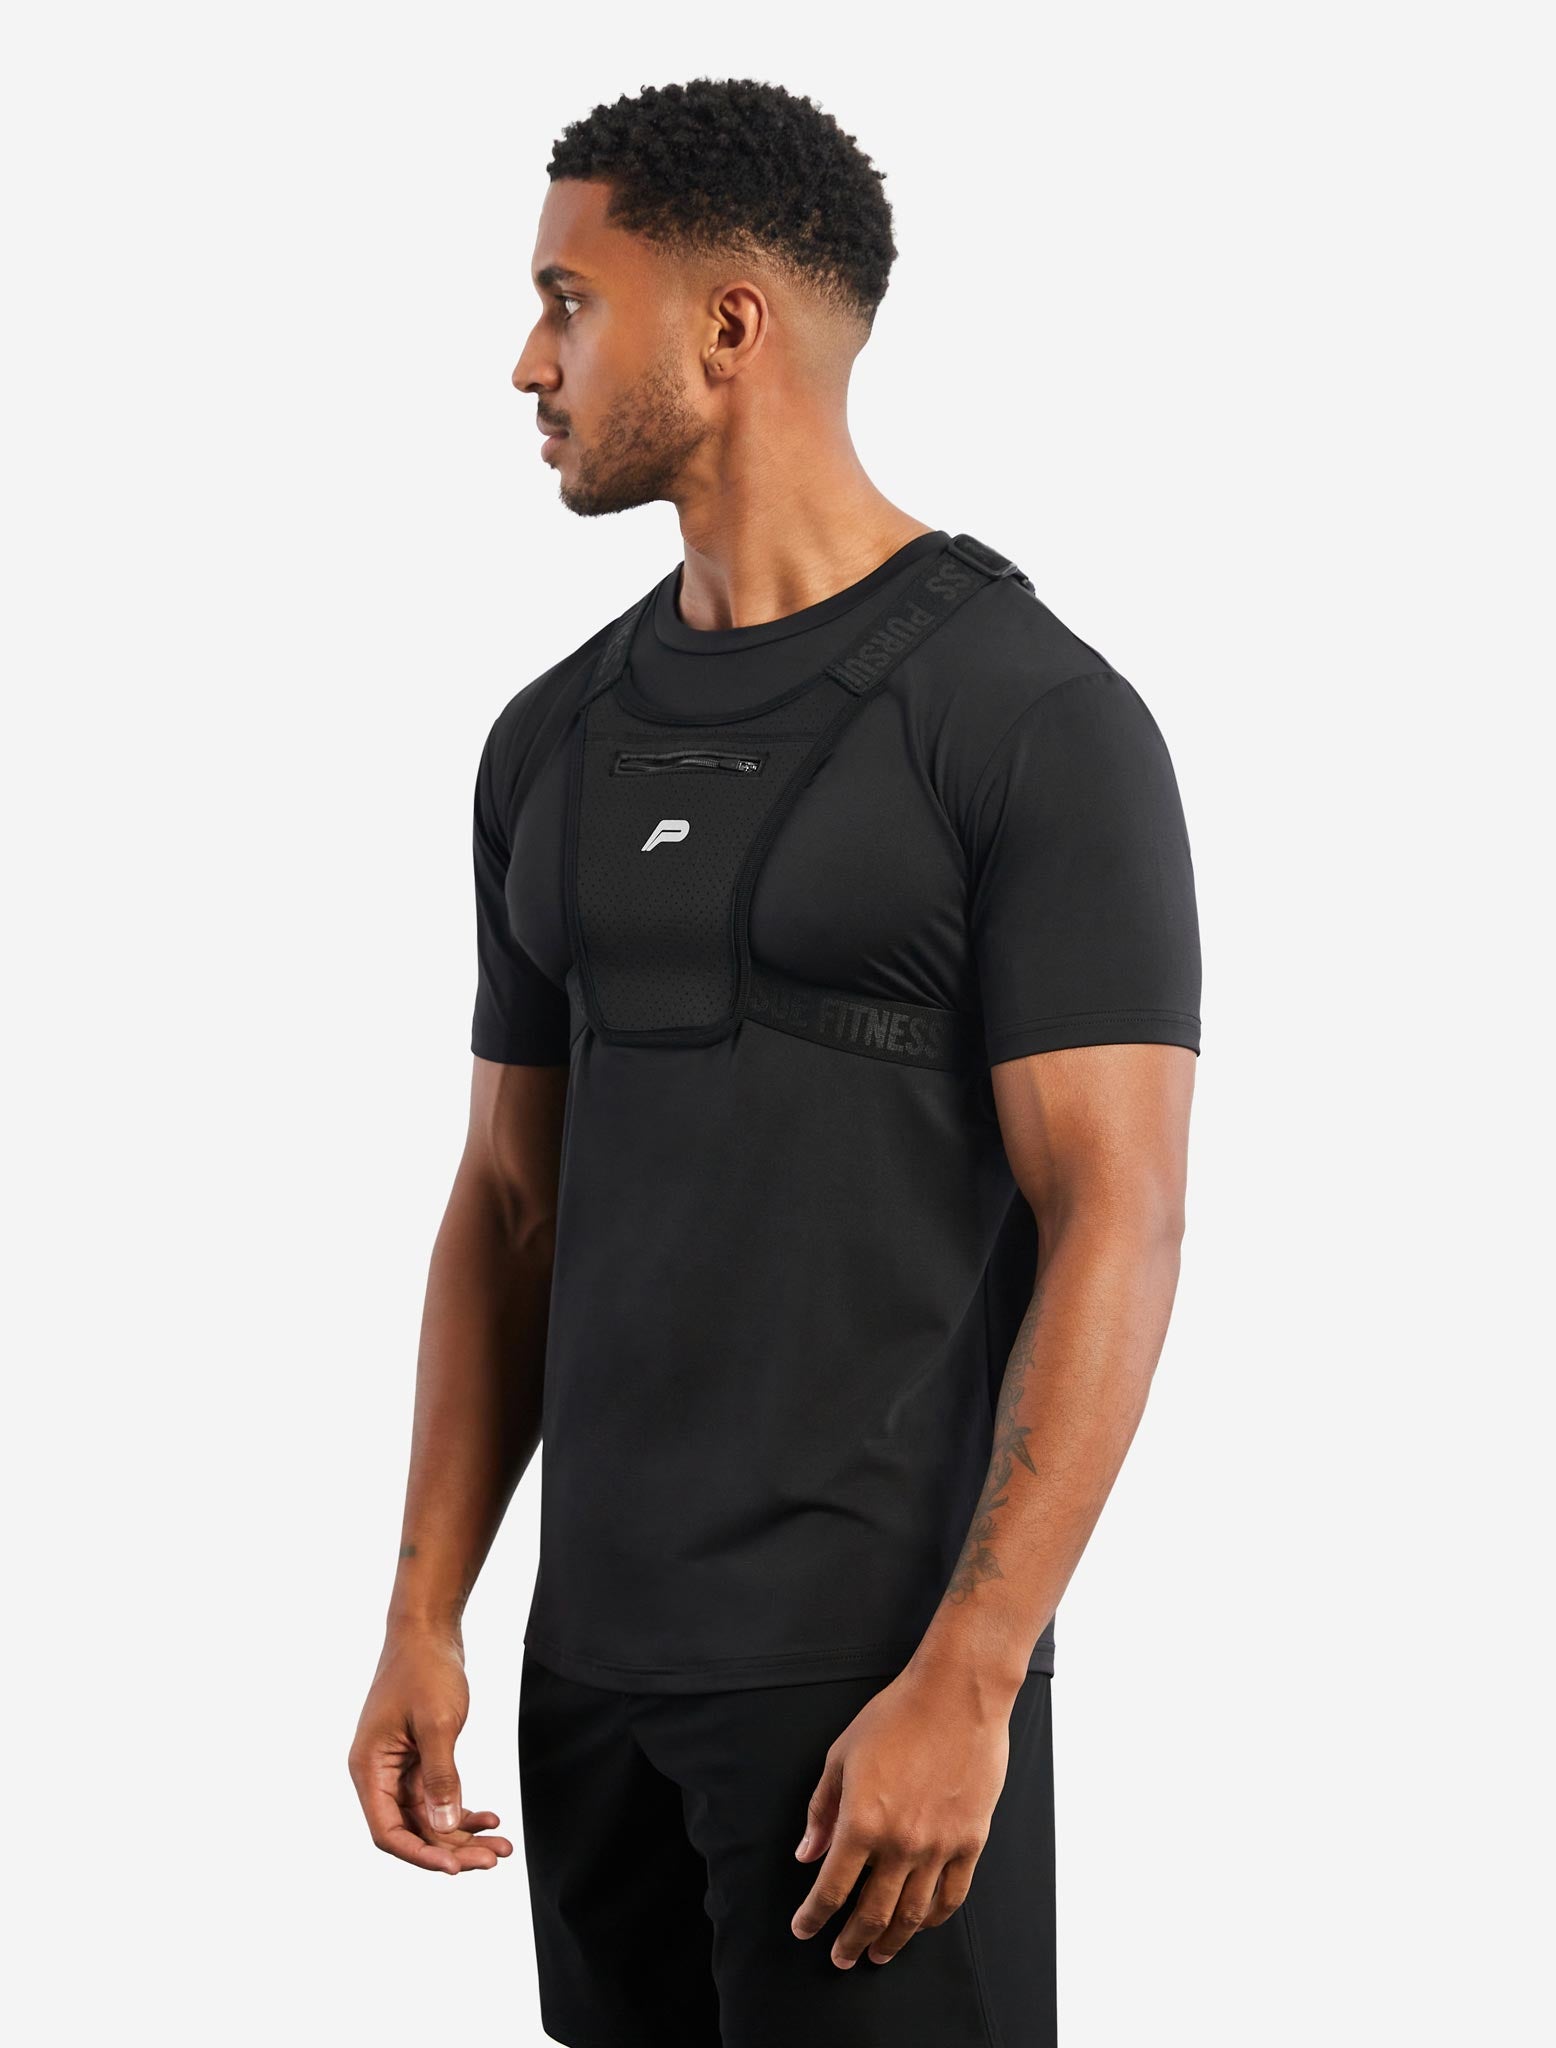 Adjustable Training Vest / Black Pursue Fitness 2